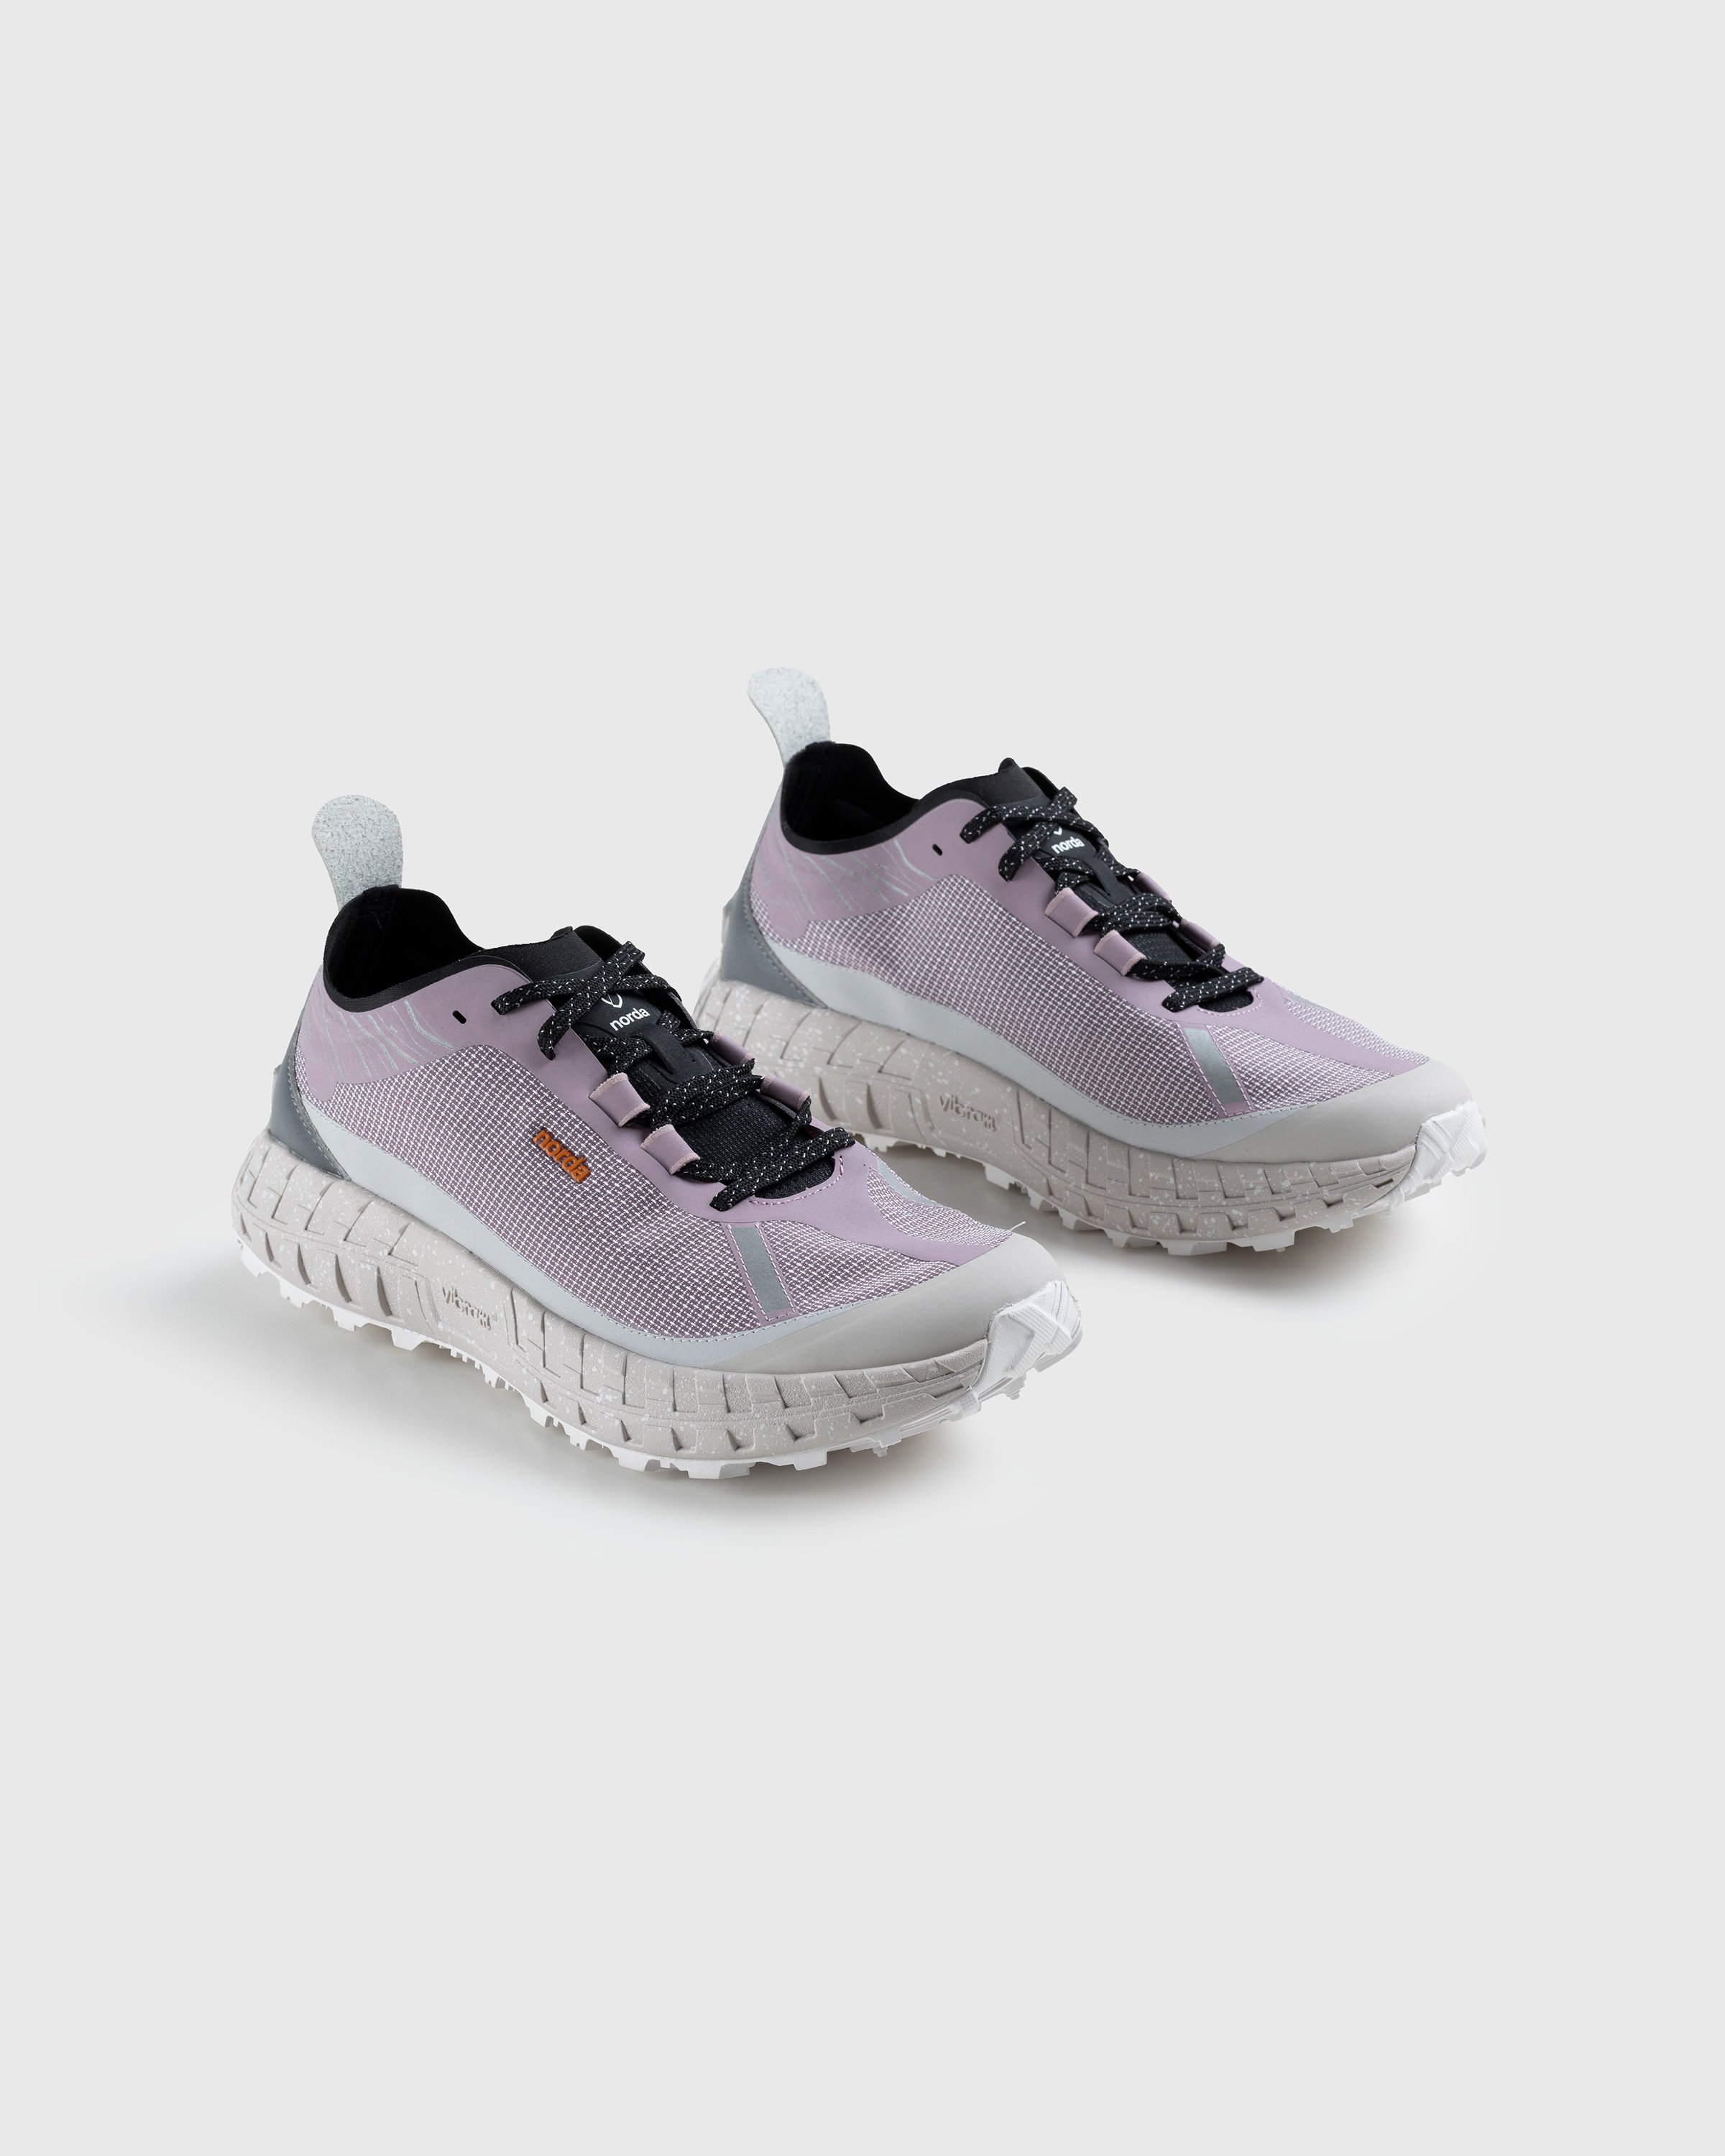 Norda - 001 M LTD Edition Lilac - Footwear - Purple - Image 3